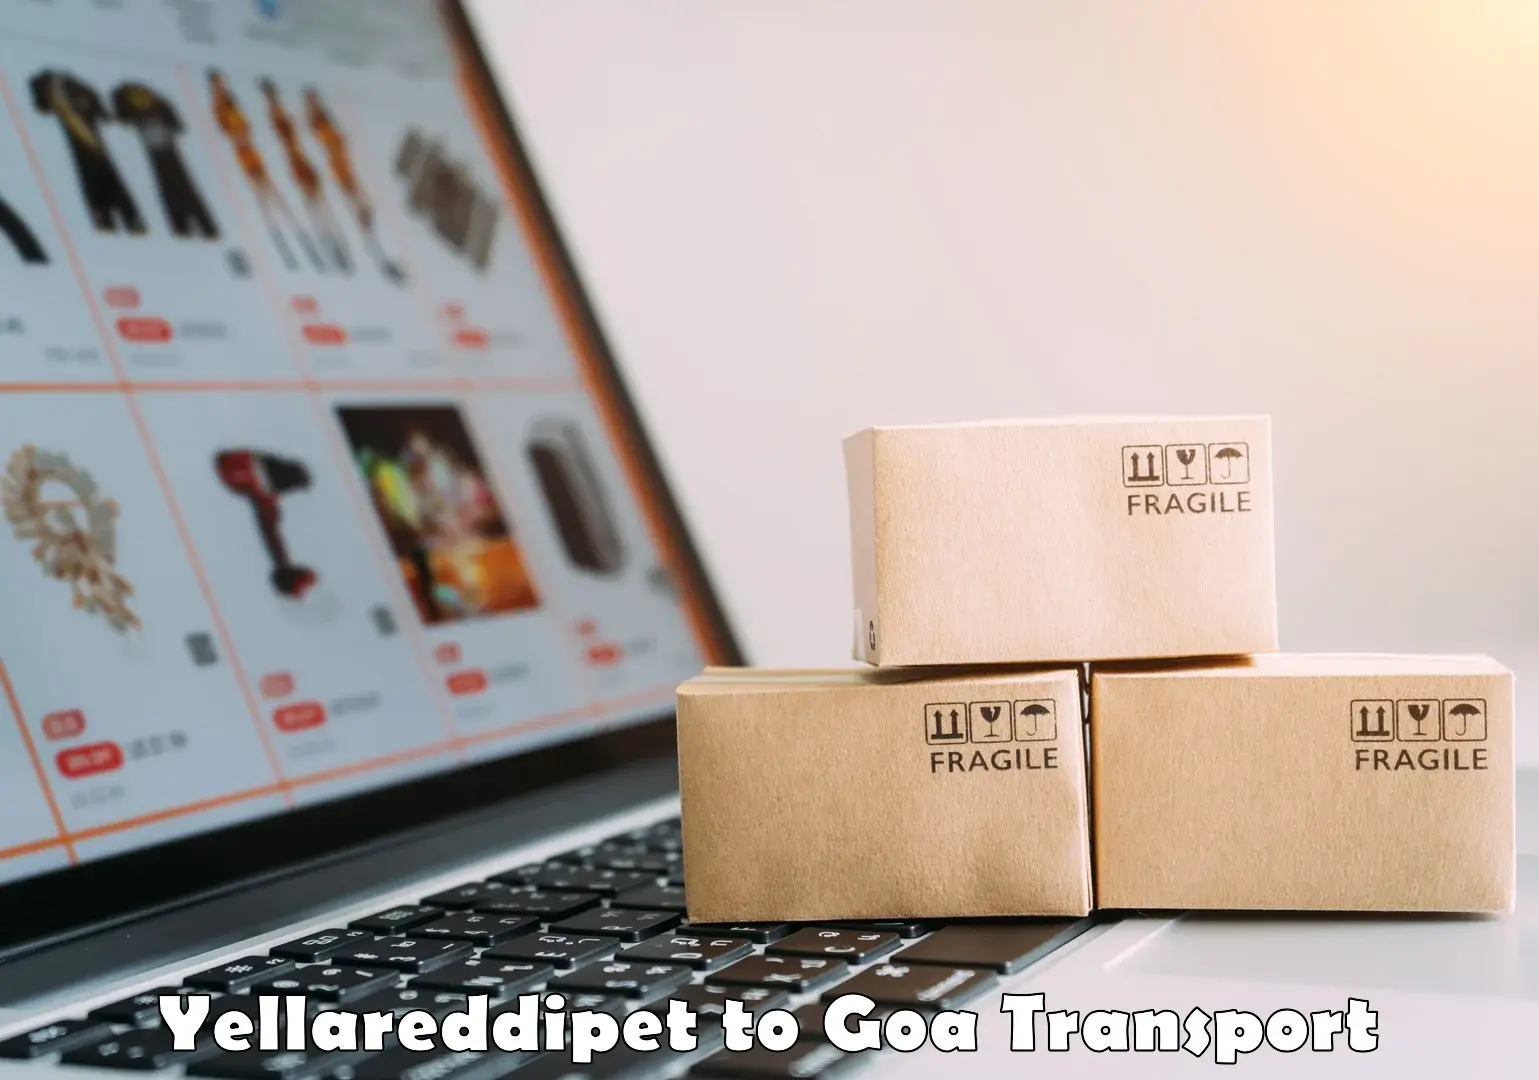 Commercial transport service Yellareddipet to Goa